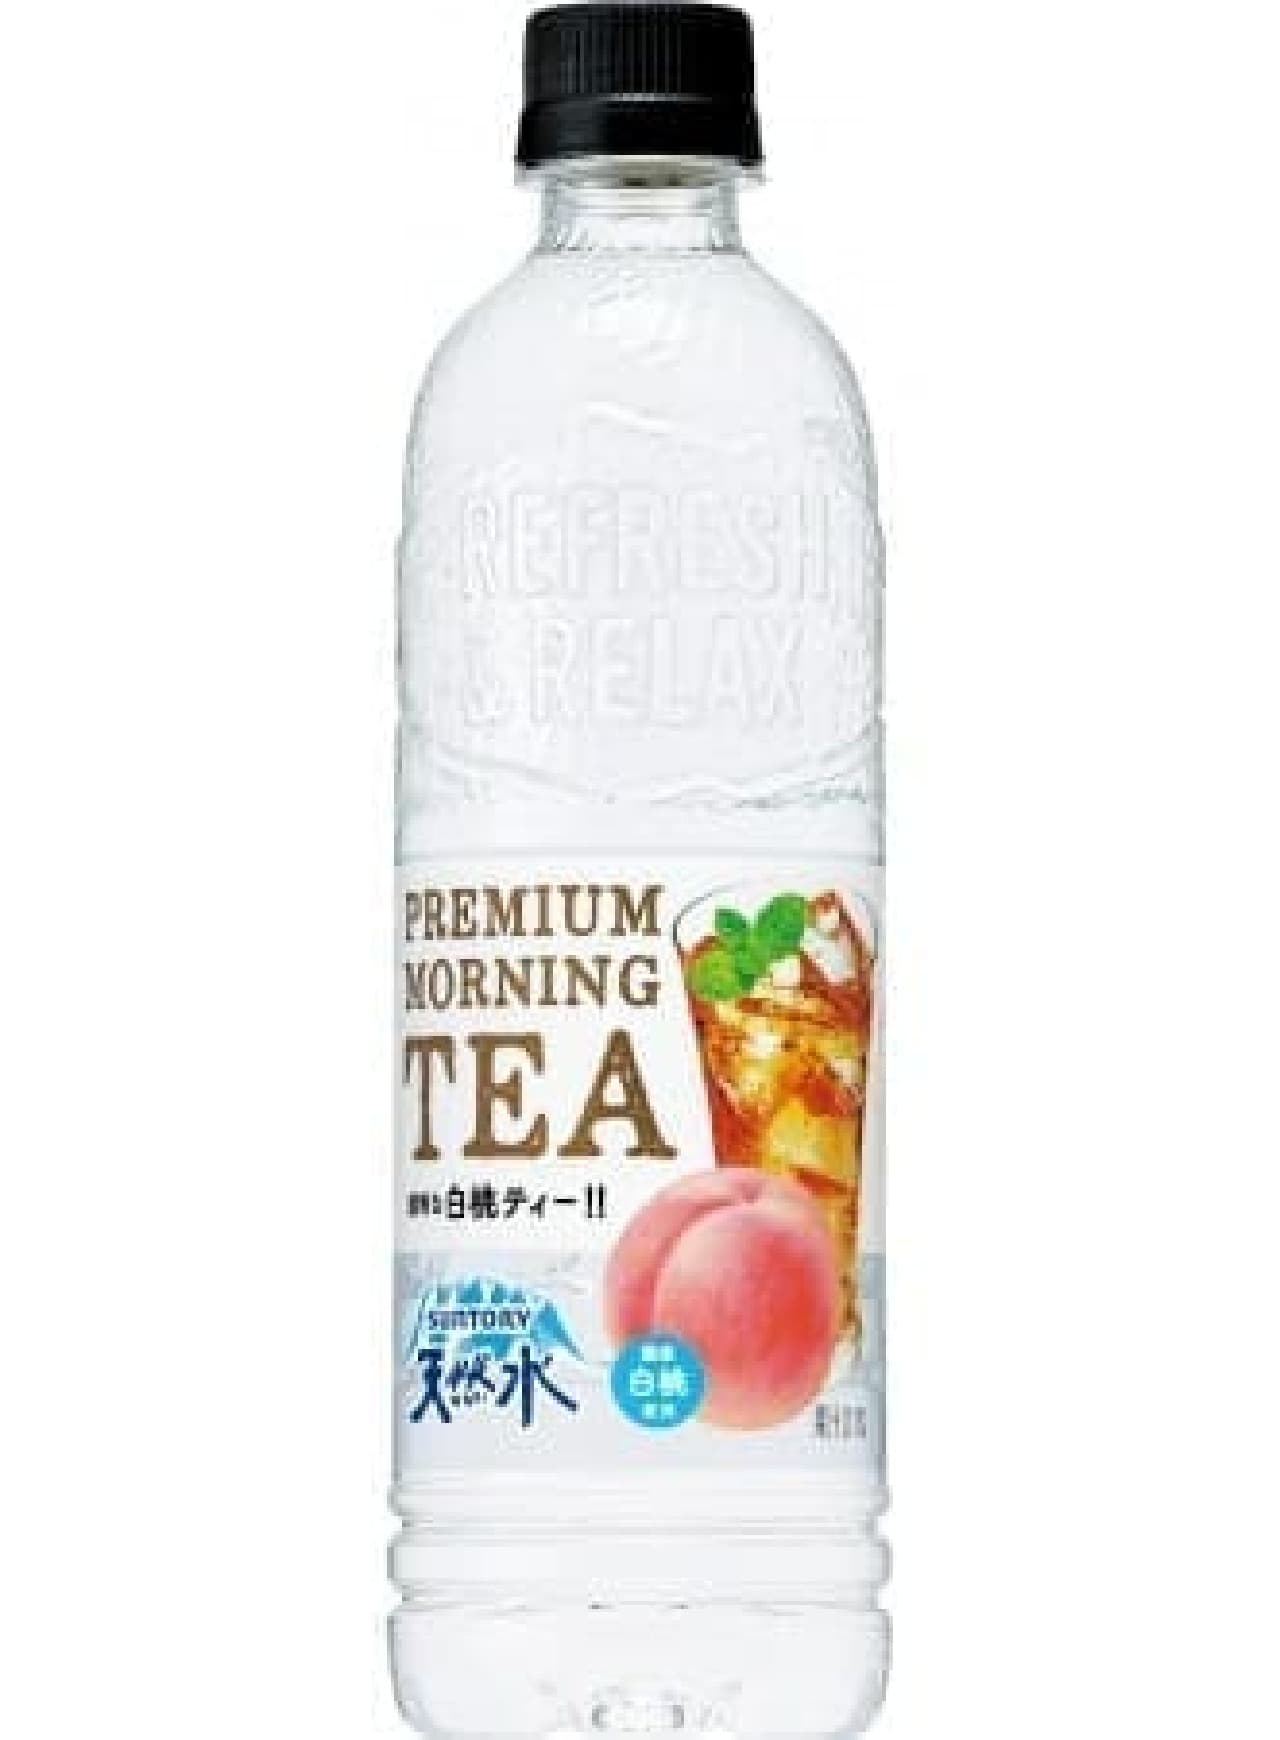 Suntory Tennensui PREMIUM MORNING TEA White Peach